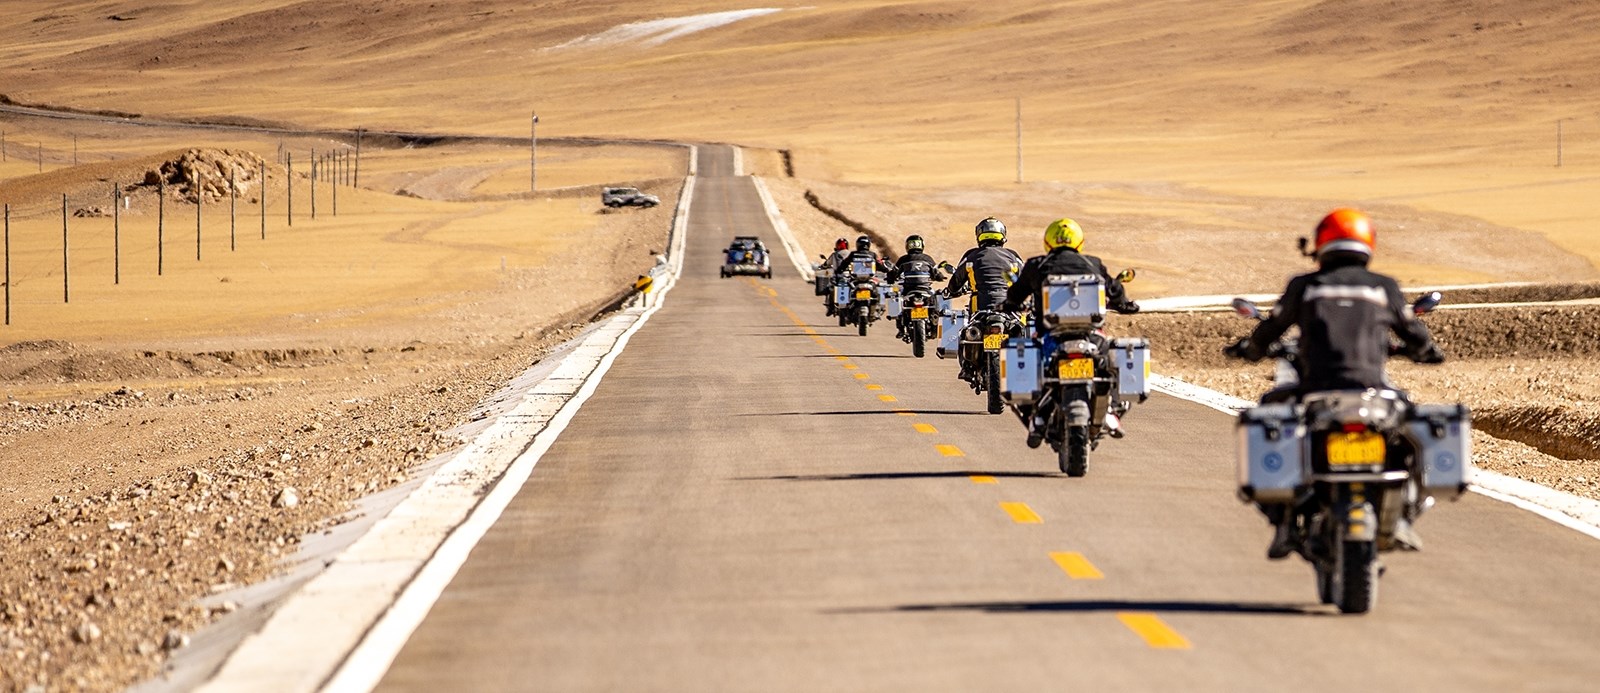 Tibet Rental Motorbike Adventure Tour to Everest and Kailash (BMW motorcycle)